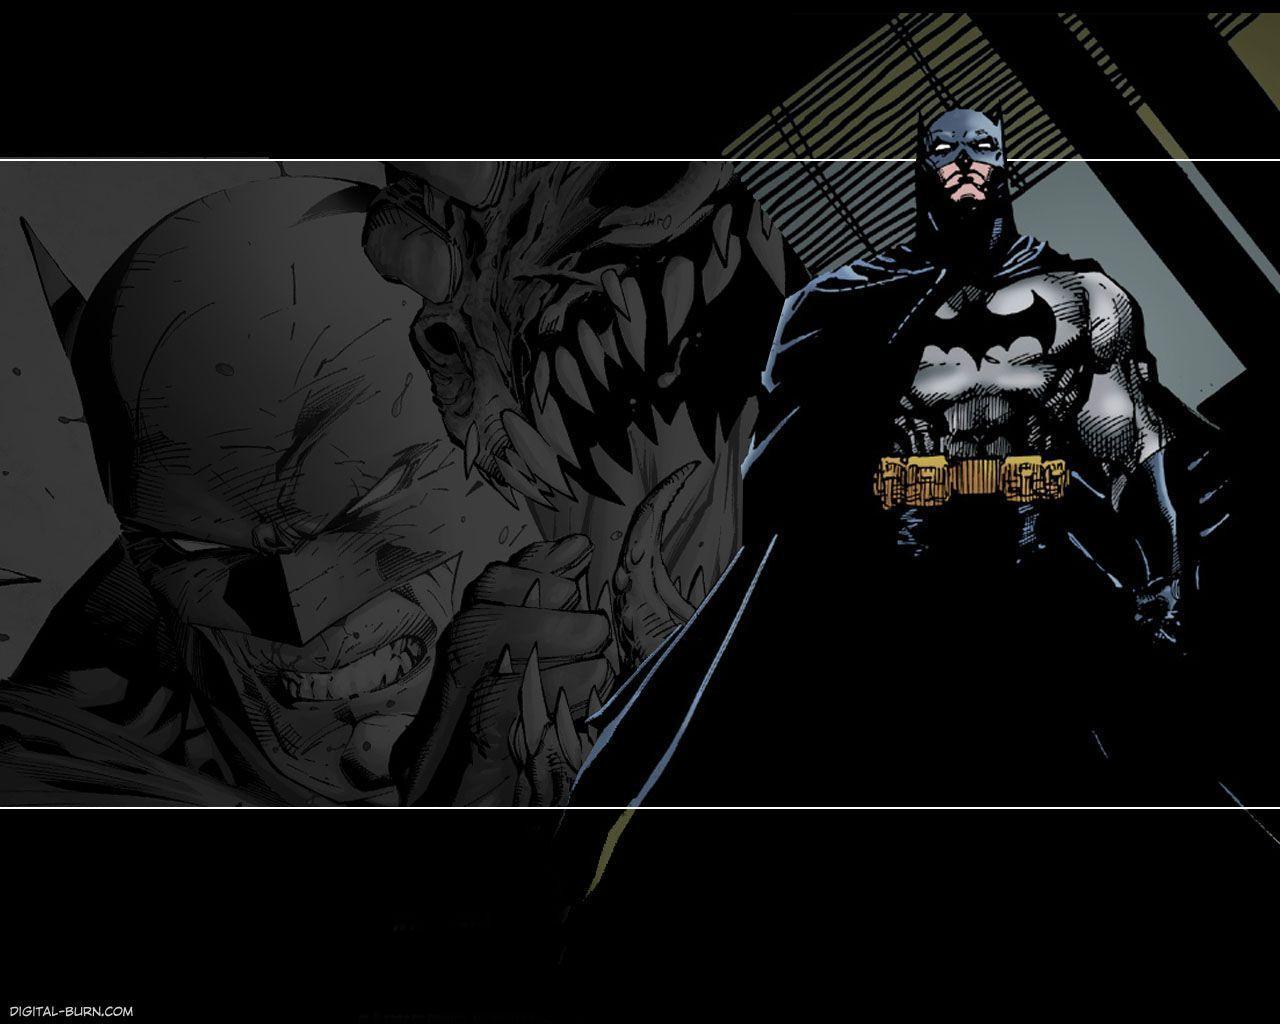 Hush Batman Wallpapers Image & Pictures